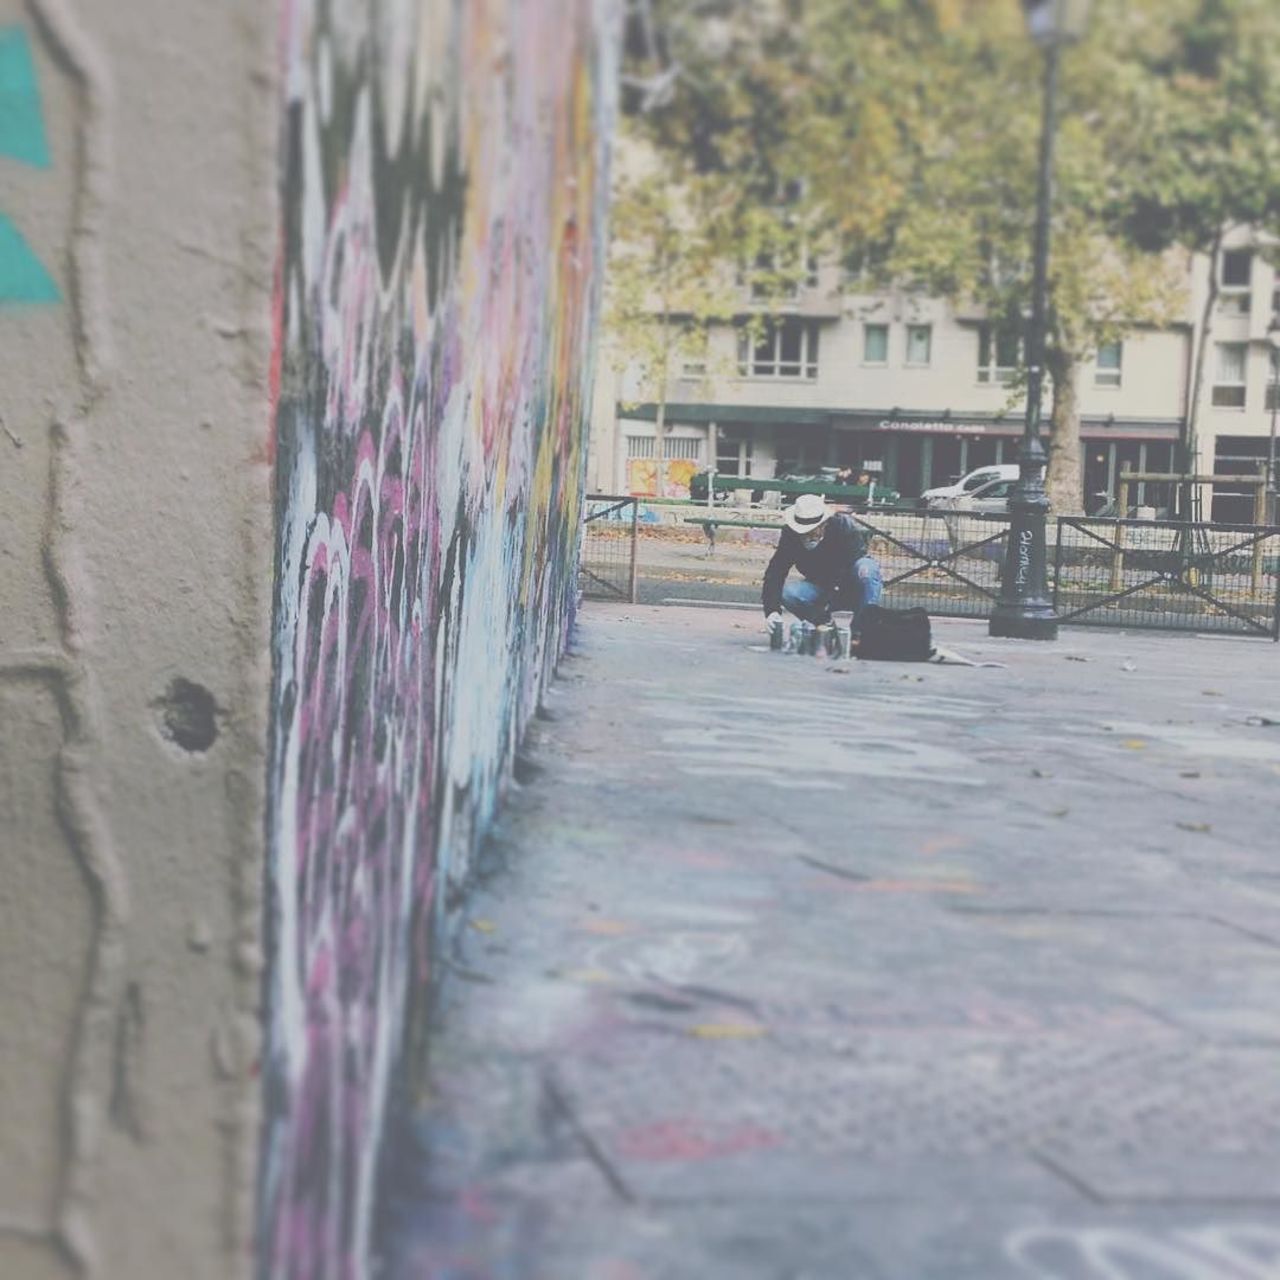 #Paris #graffiti photo by @natalywildheart http://ift.tt/1i8suEH #StreetArt https://t.co/TZukUD6fI5